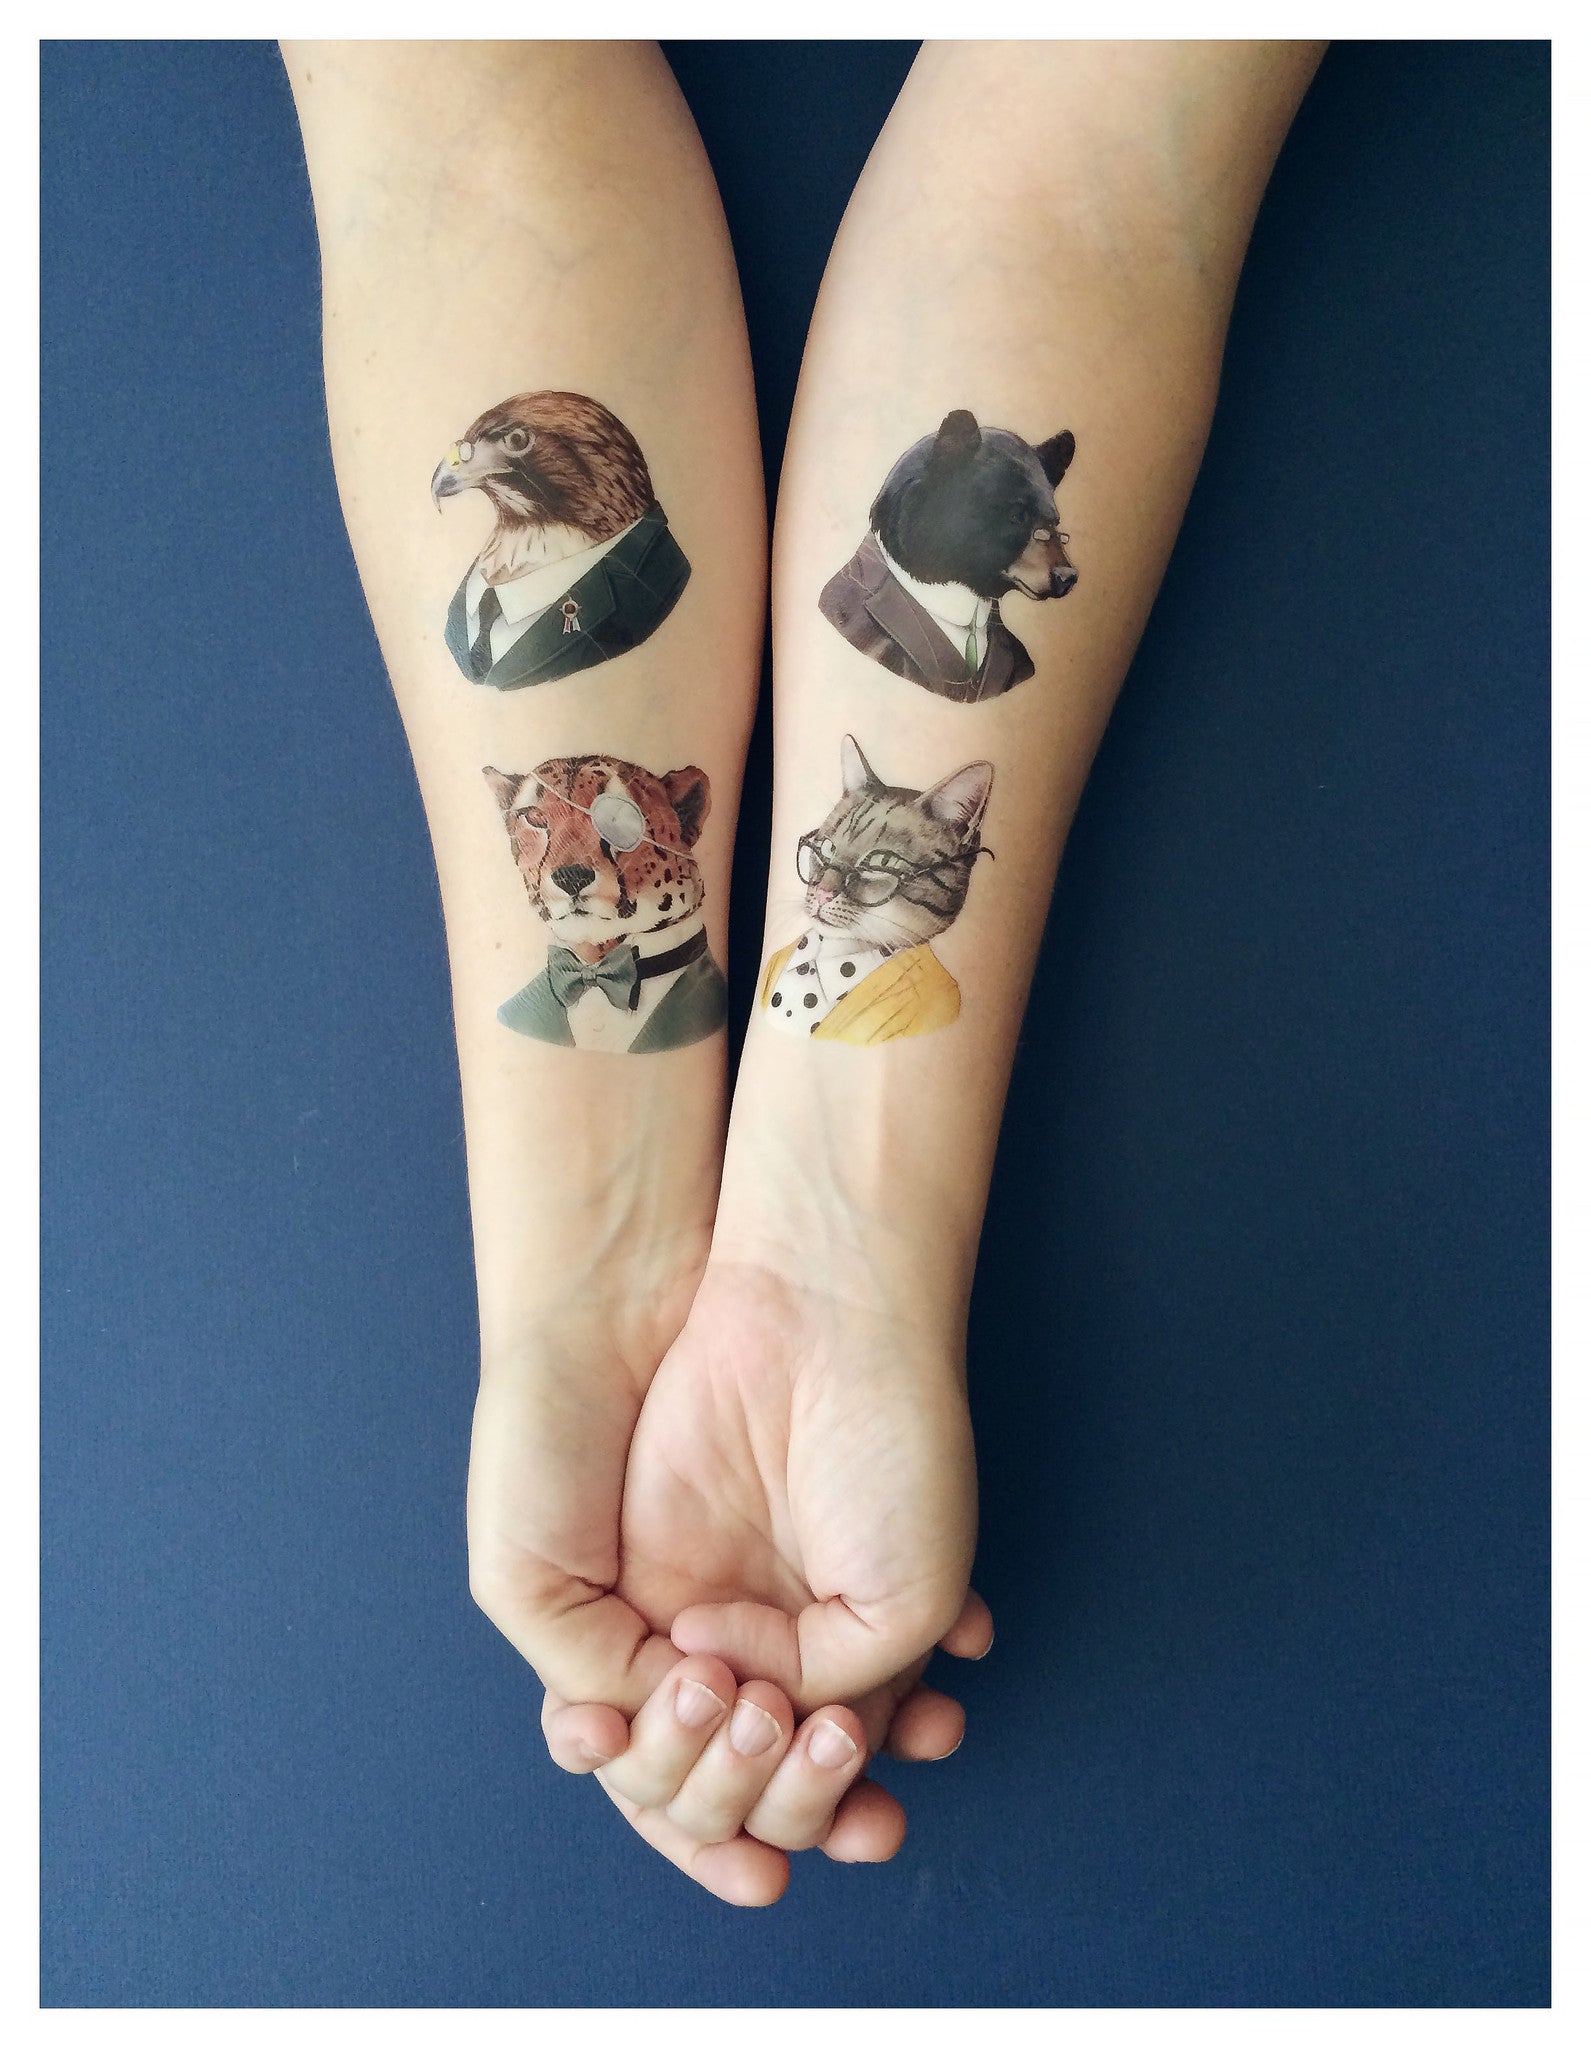 Tattooing Sphynx Hairless Cats Is Cruel  PetHelpful